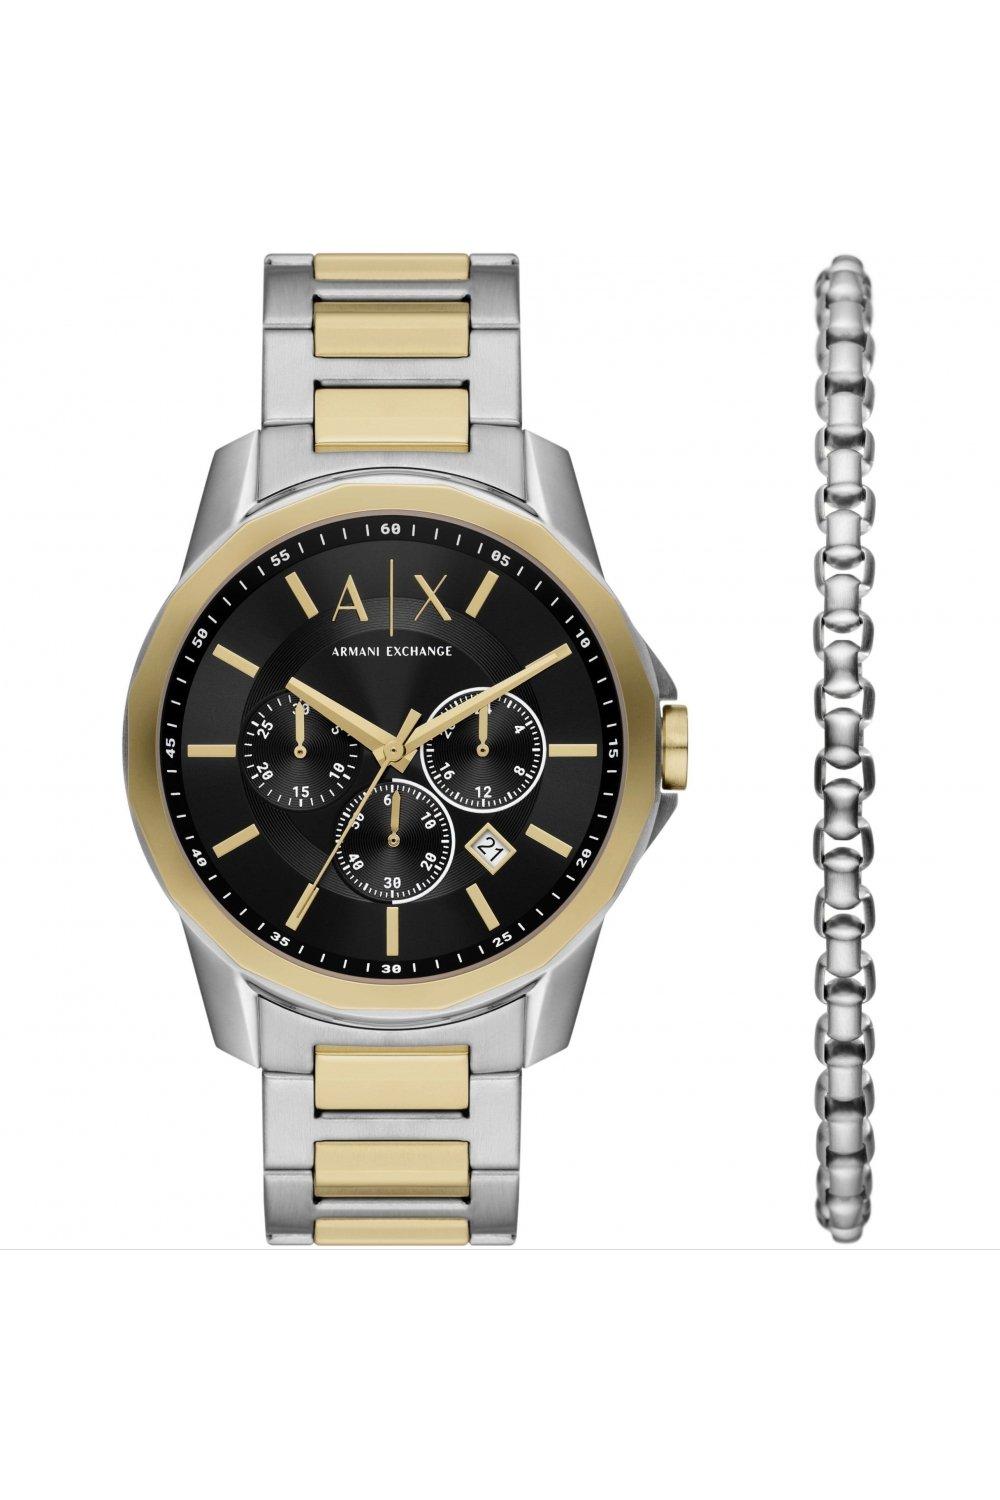 stainless steel fashion analogue quartz watch - ax7148set